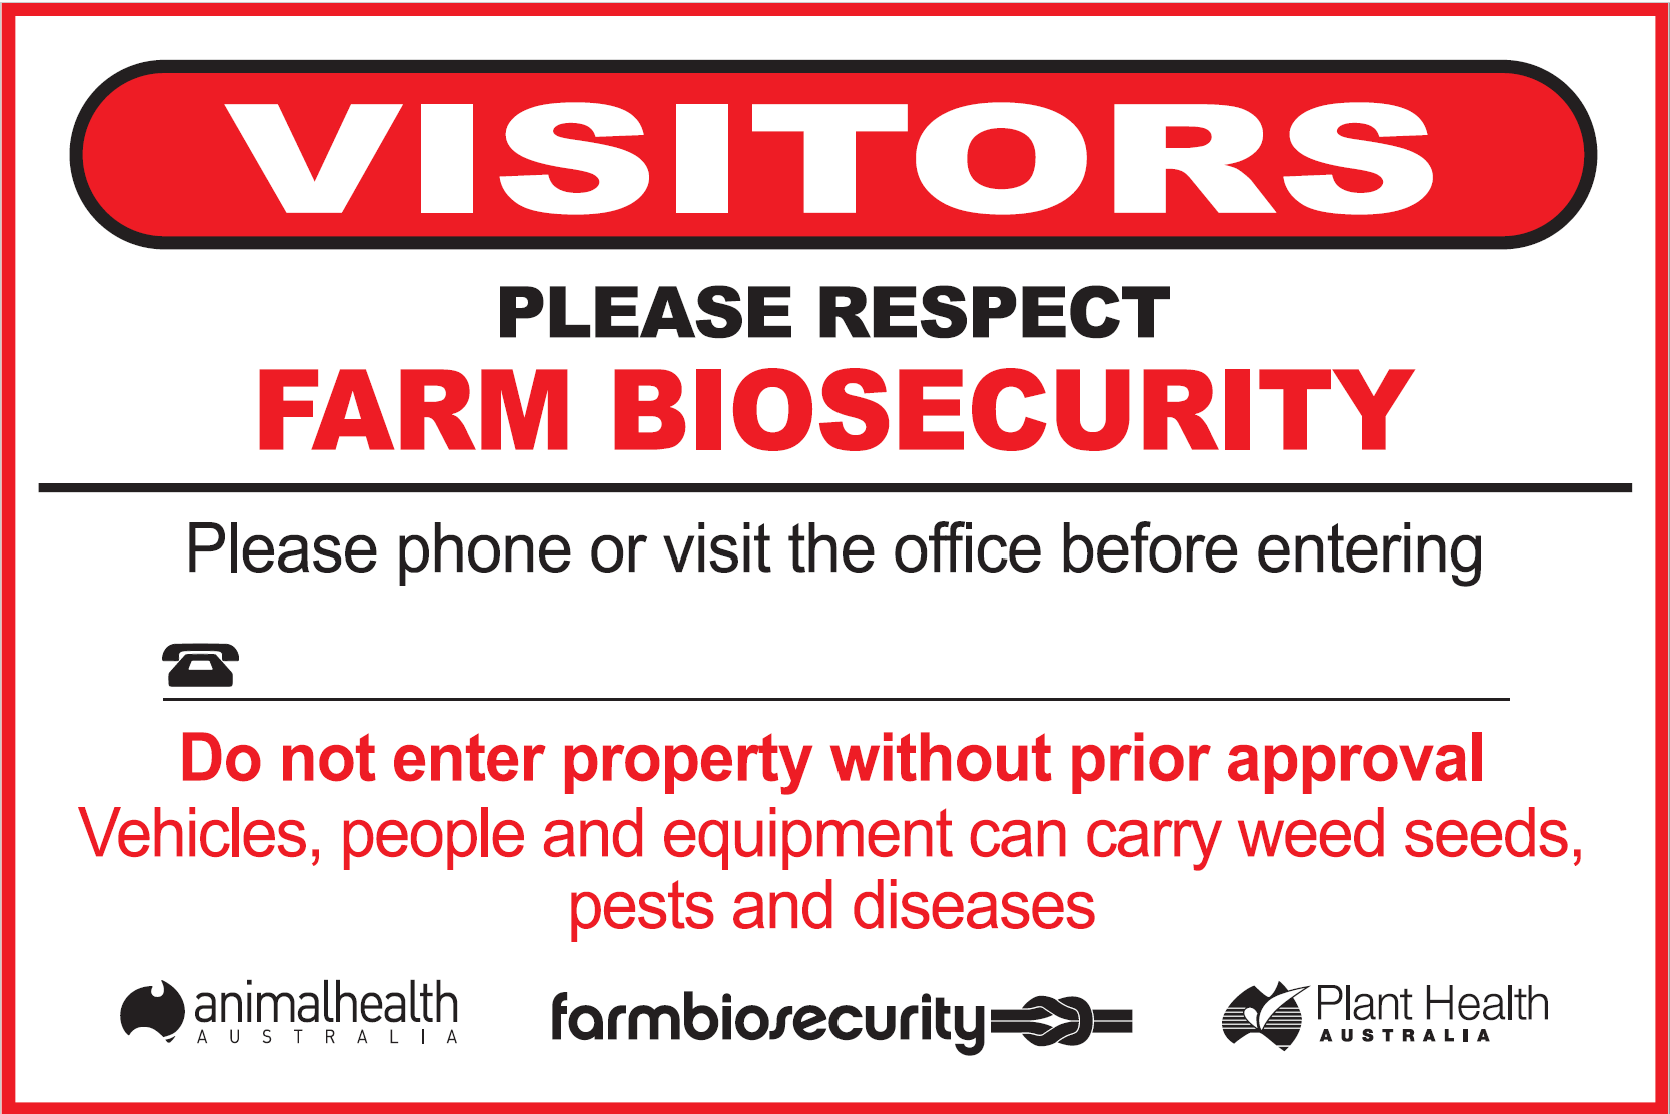 Farm biosecurity